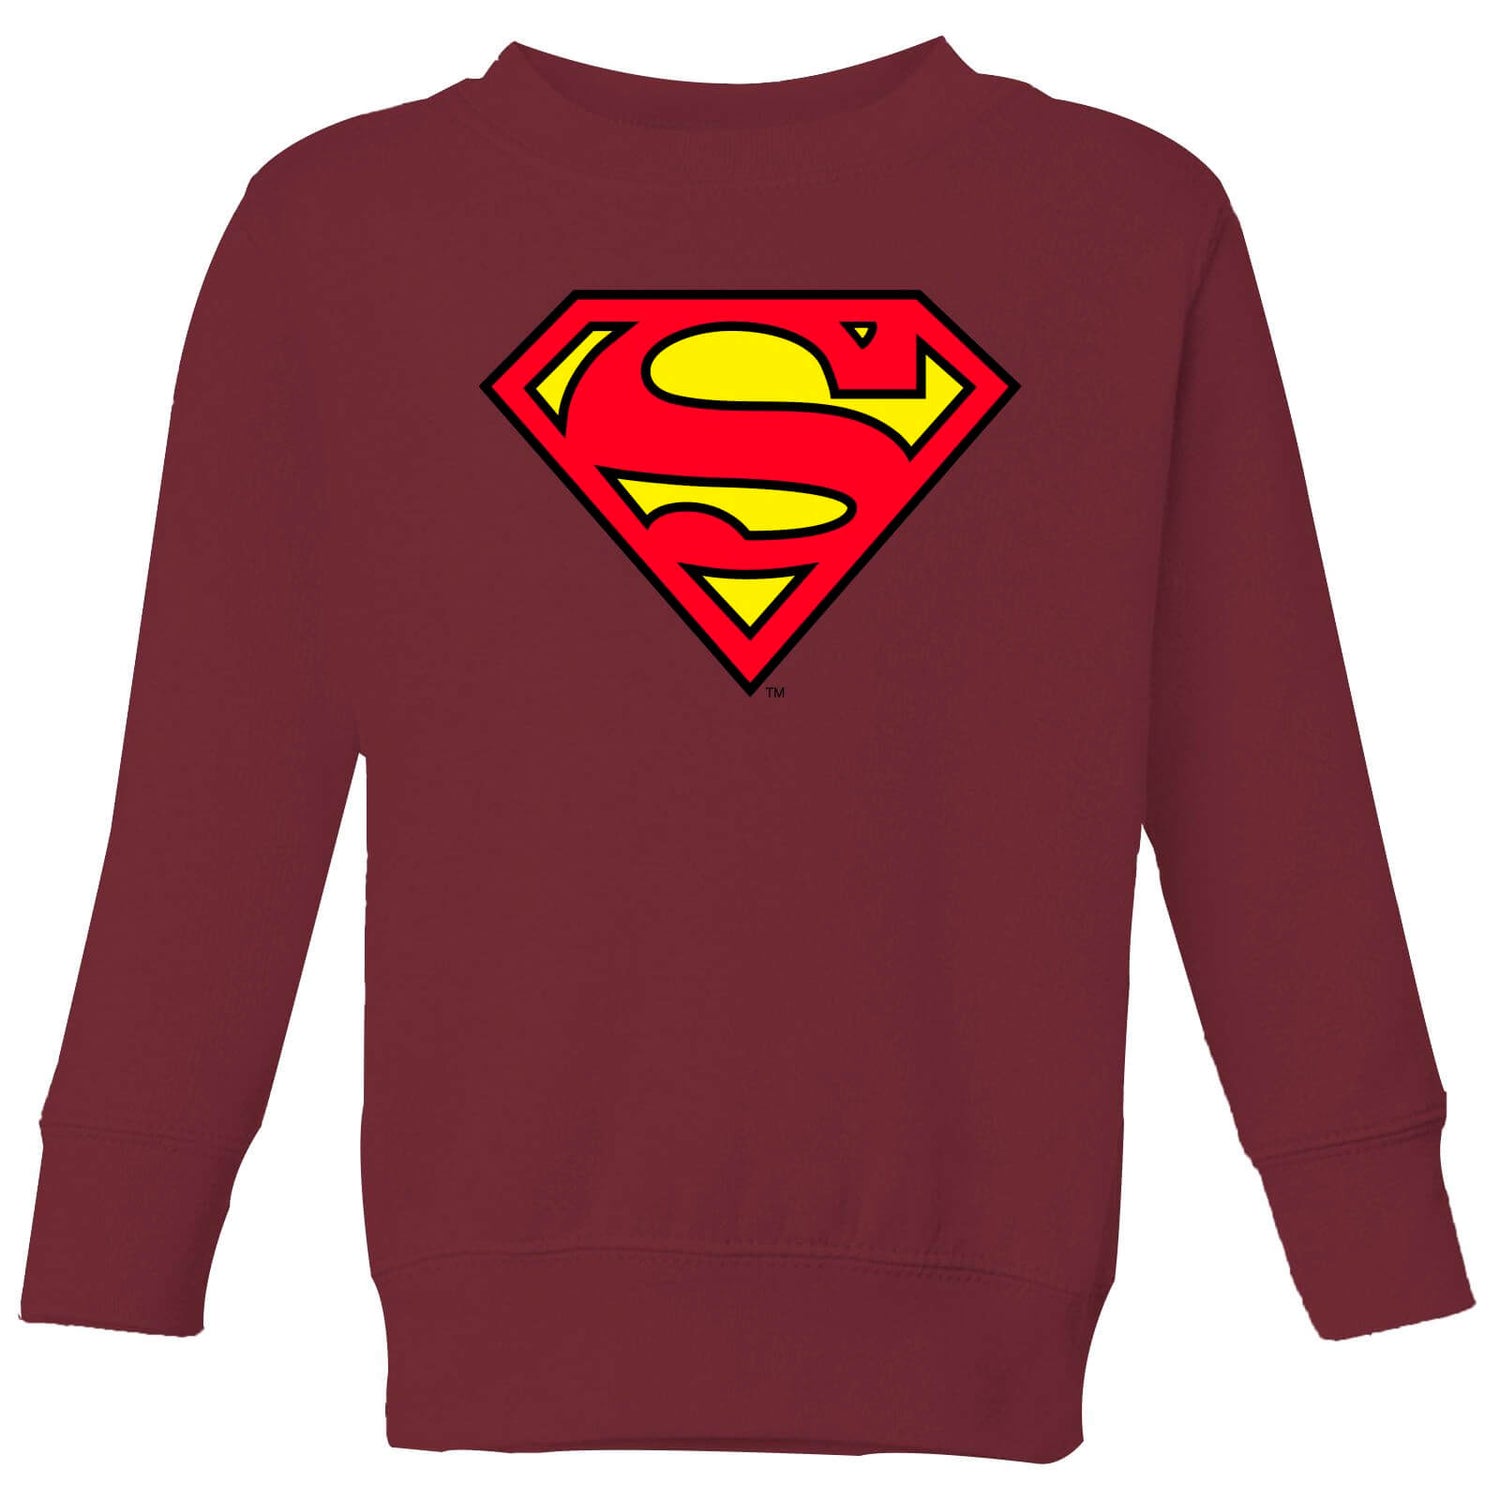 Official Superman Shield Kids' Sweatshirt - Burgundy